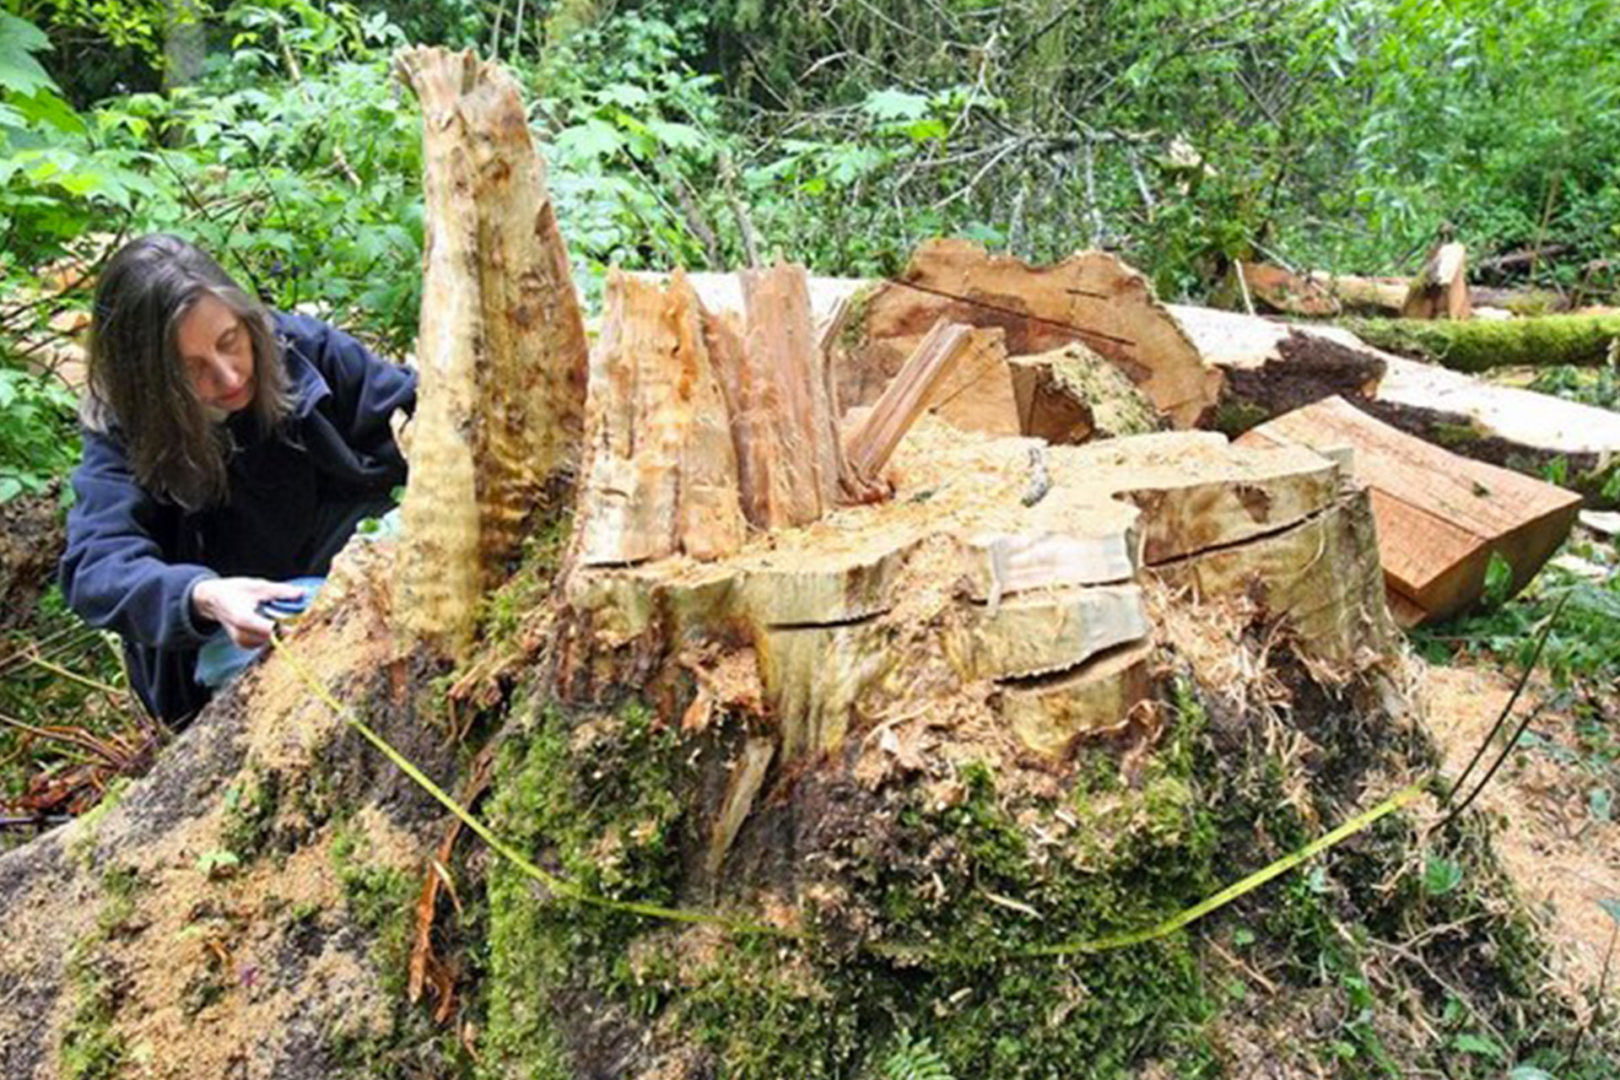 Lampoon, Illegal logging, image fufsblog